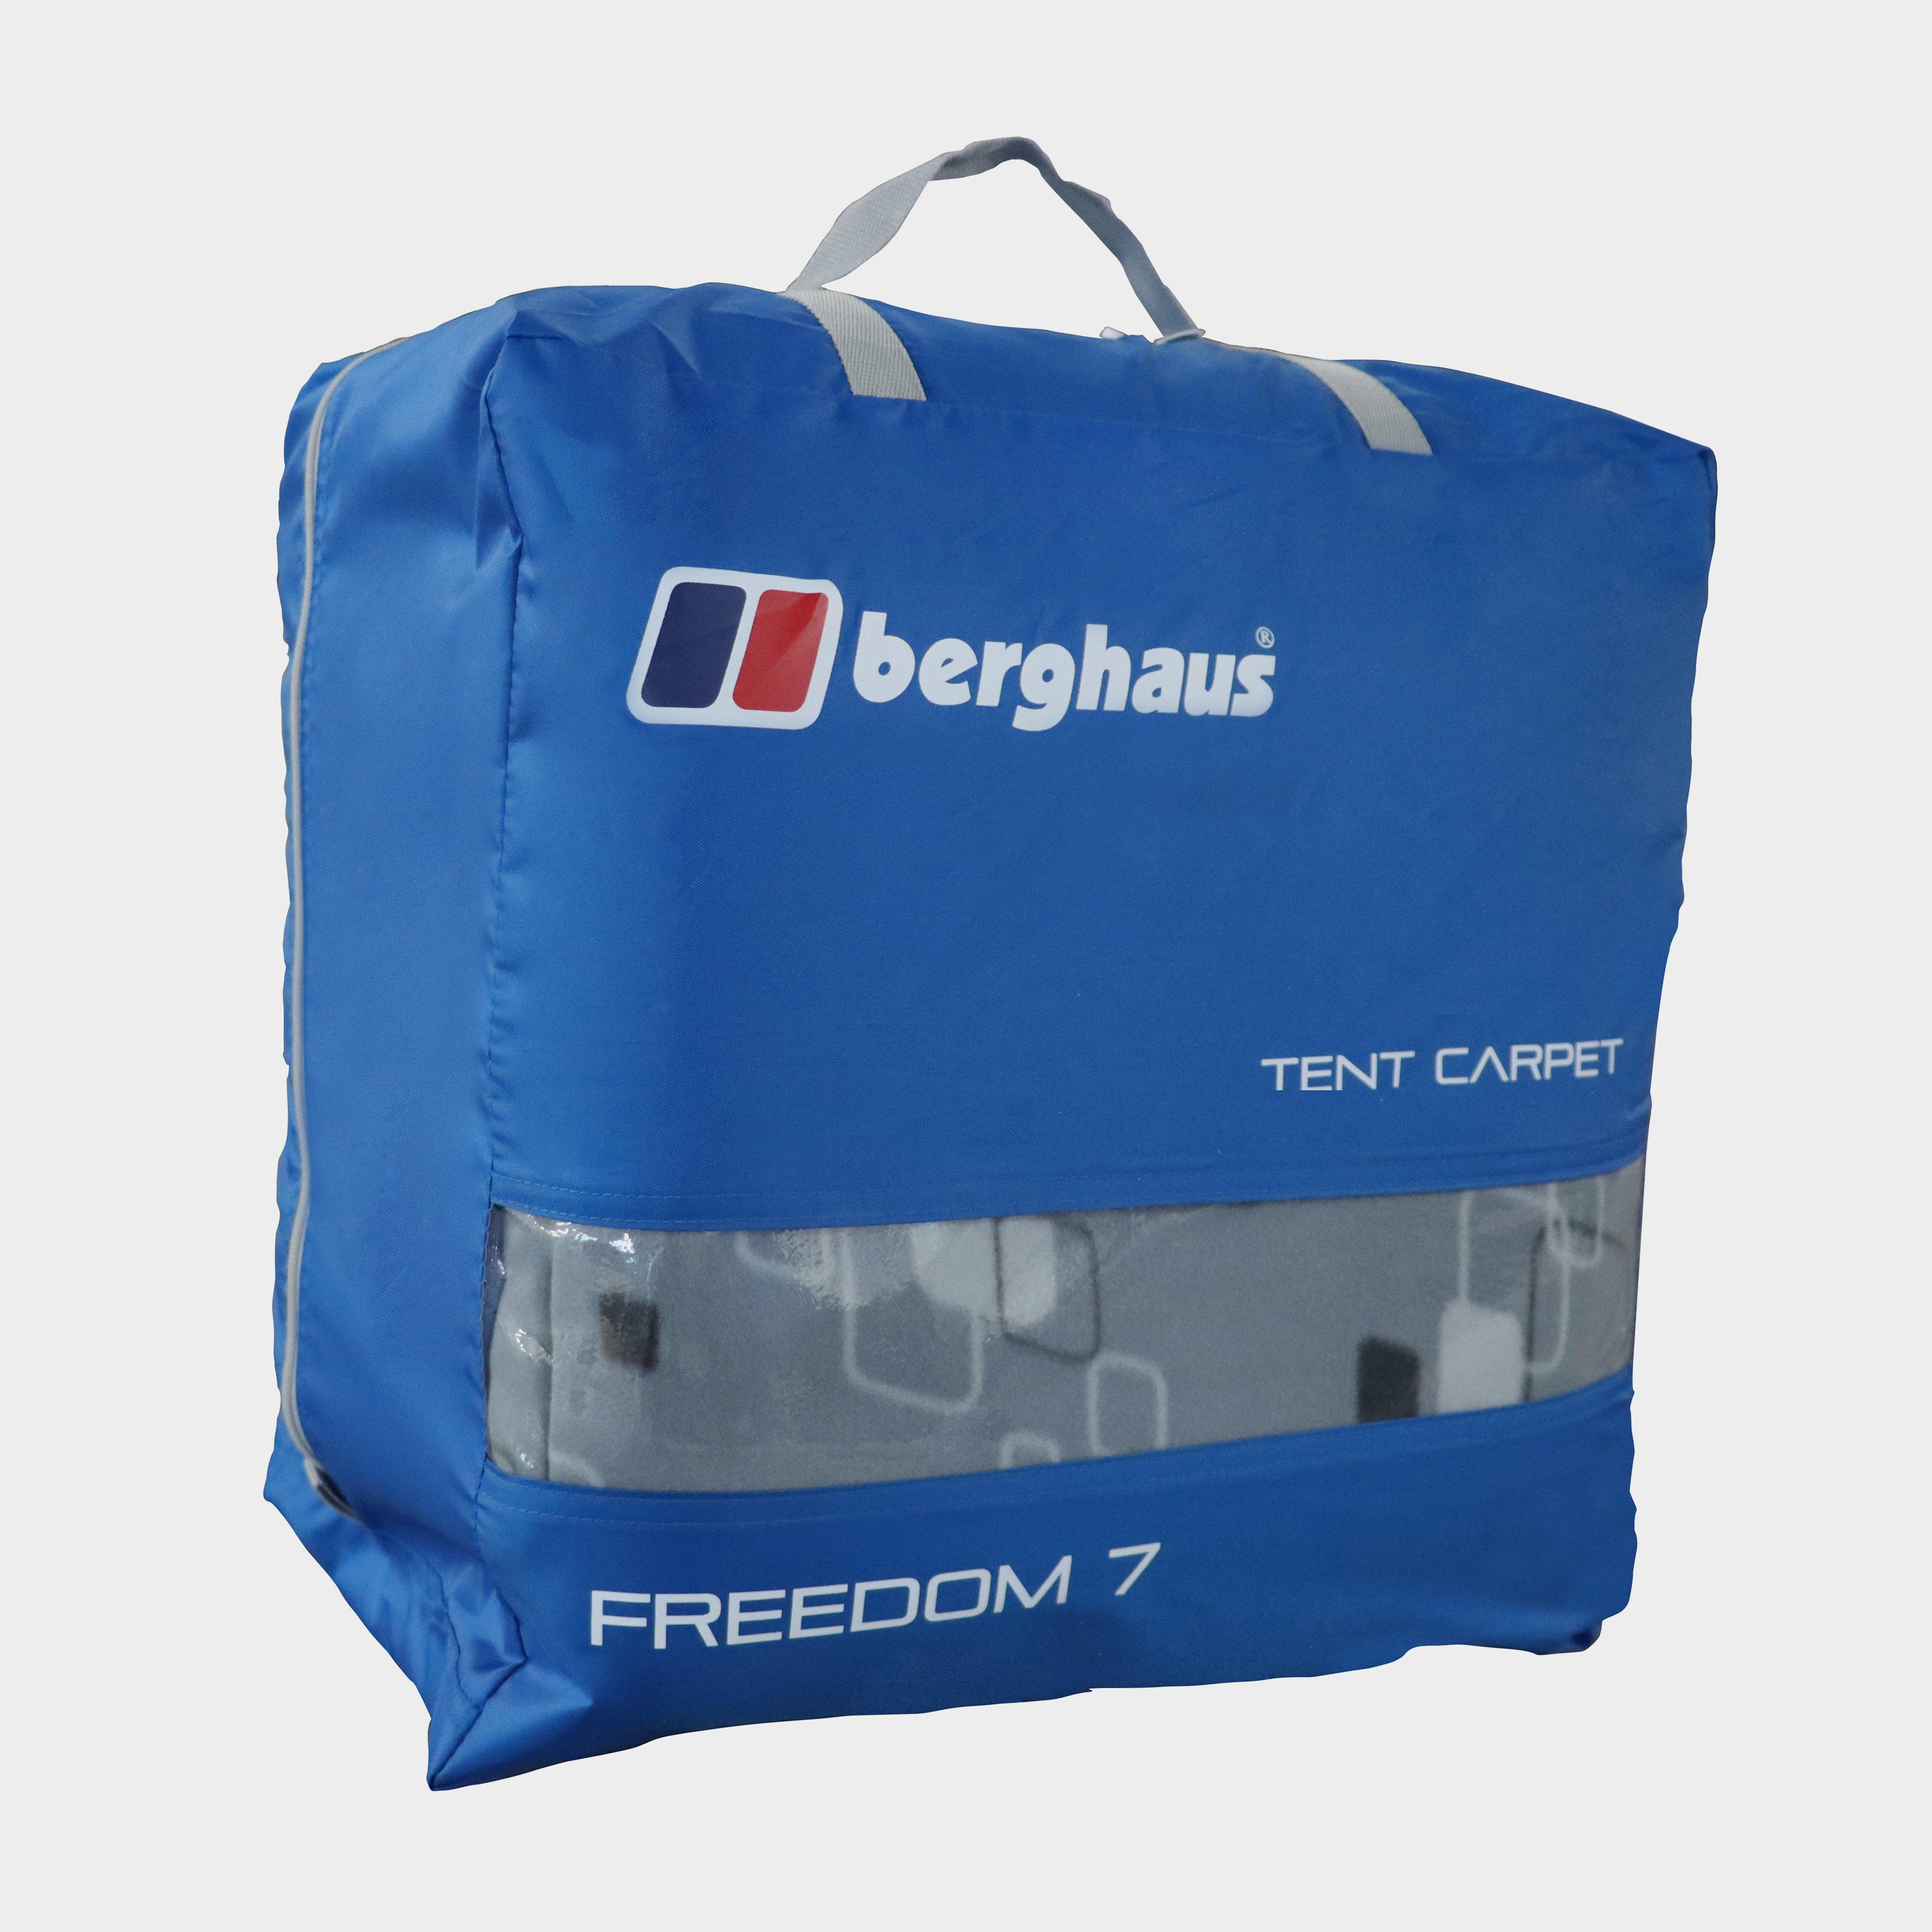  Berghaus Freedom 7 Tent Carpet, Grey